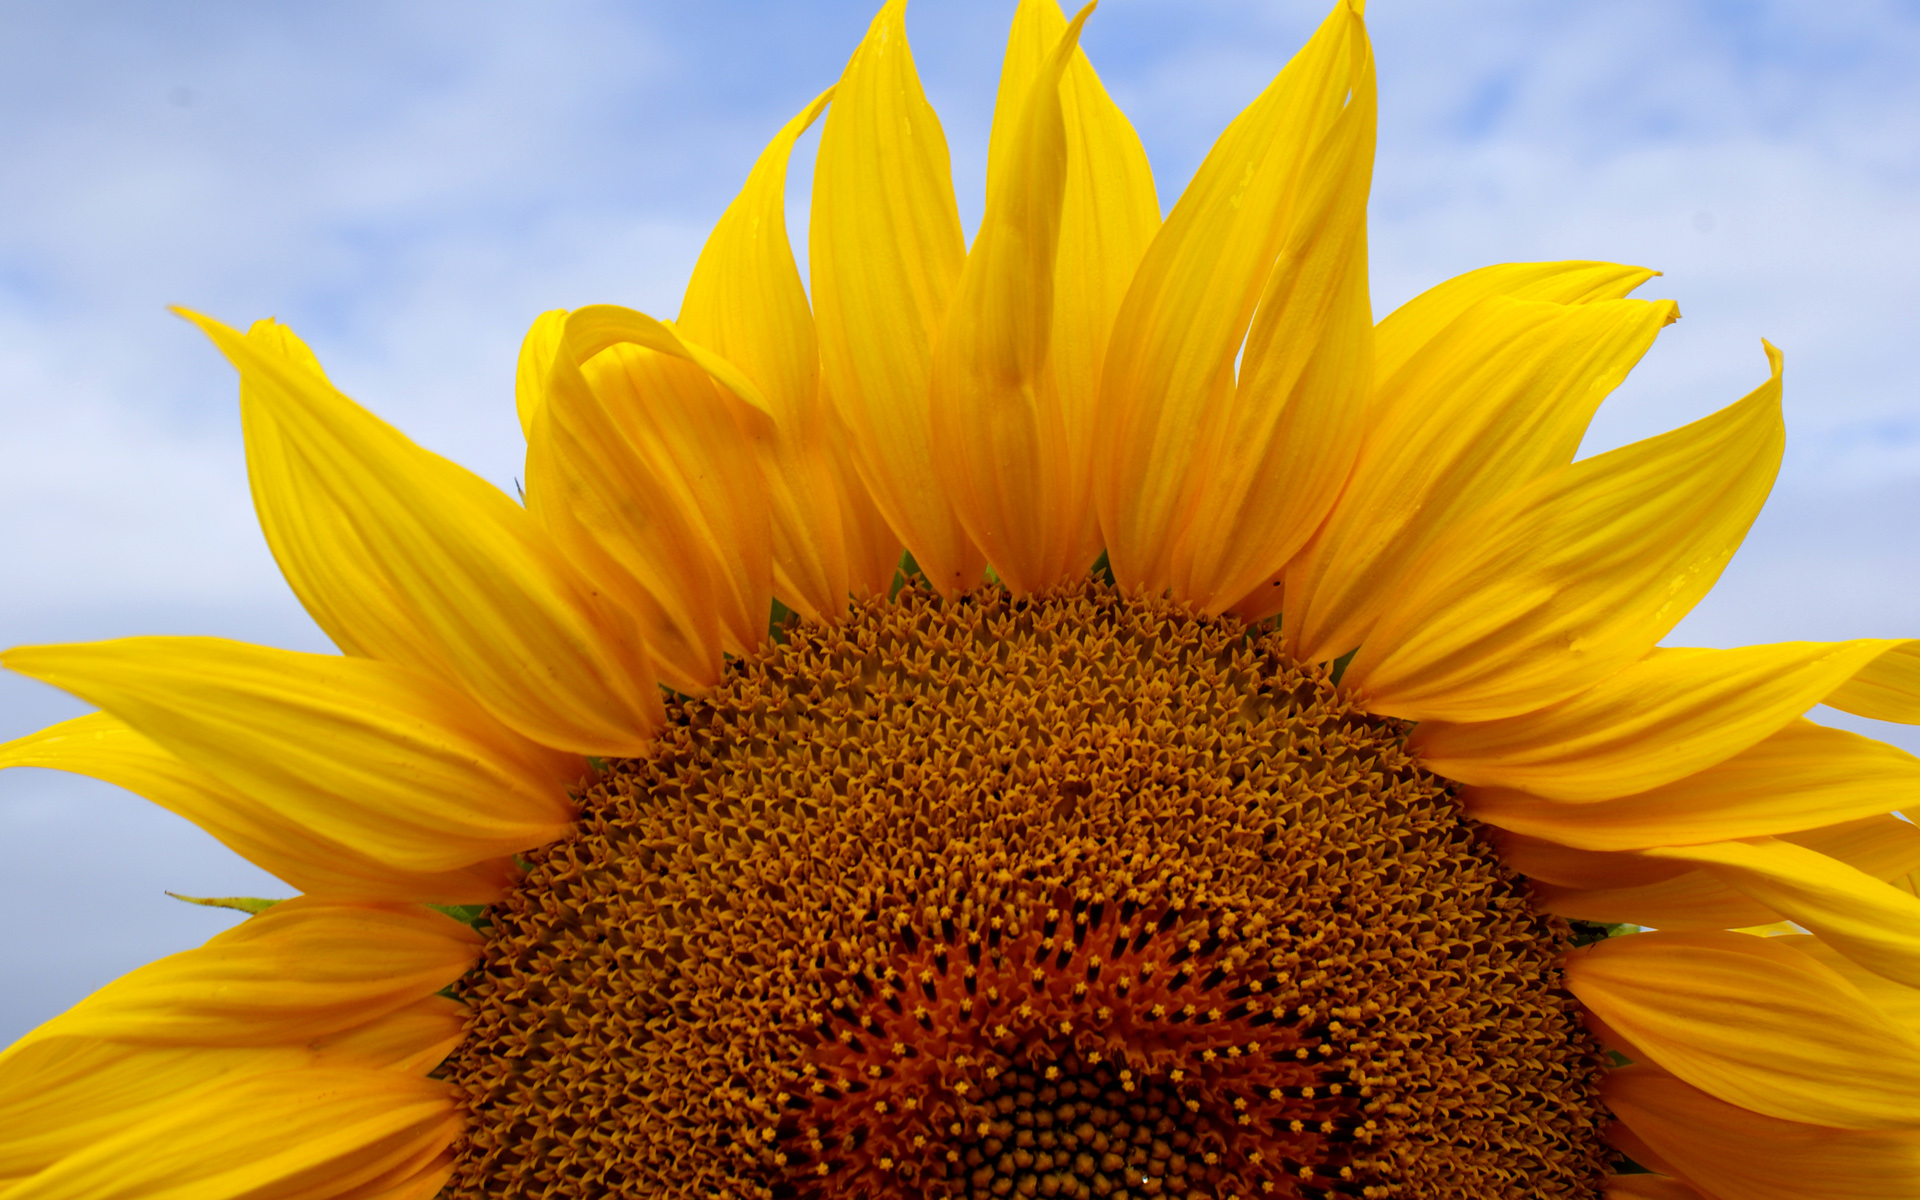 30826 sunflower puter image flowers desktop 1920x1200px - 1533834